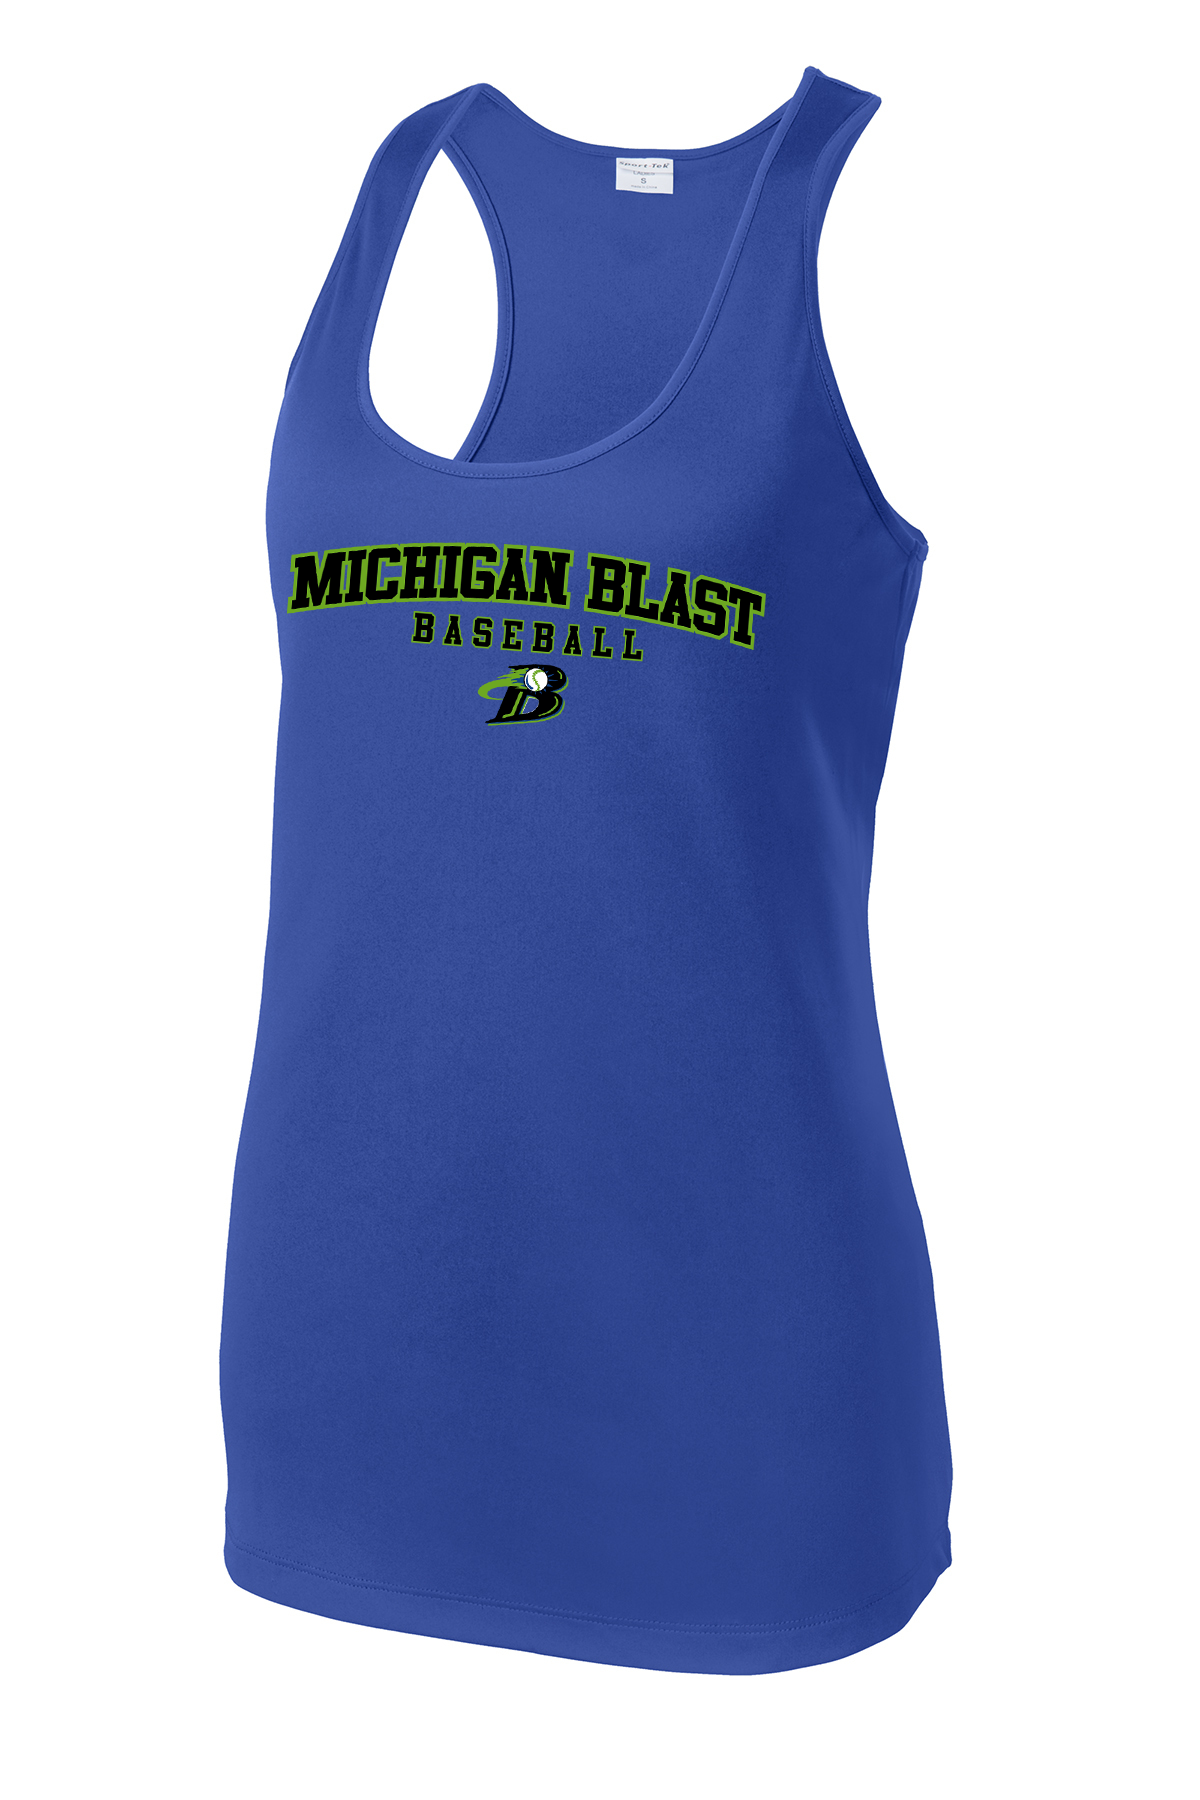 Michigan Blast Elite Baseball Women's Racerback Tank